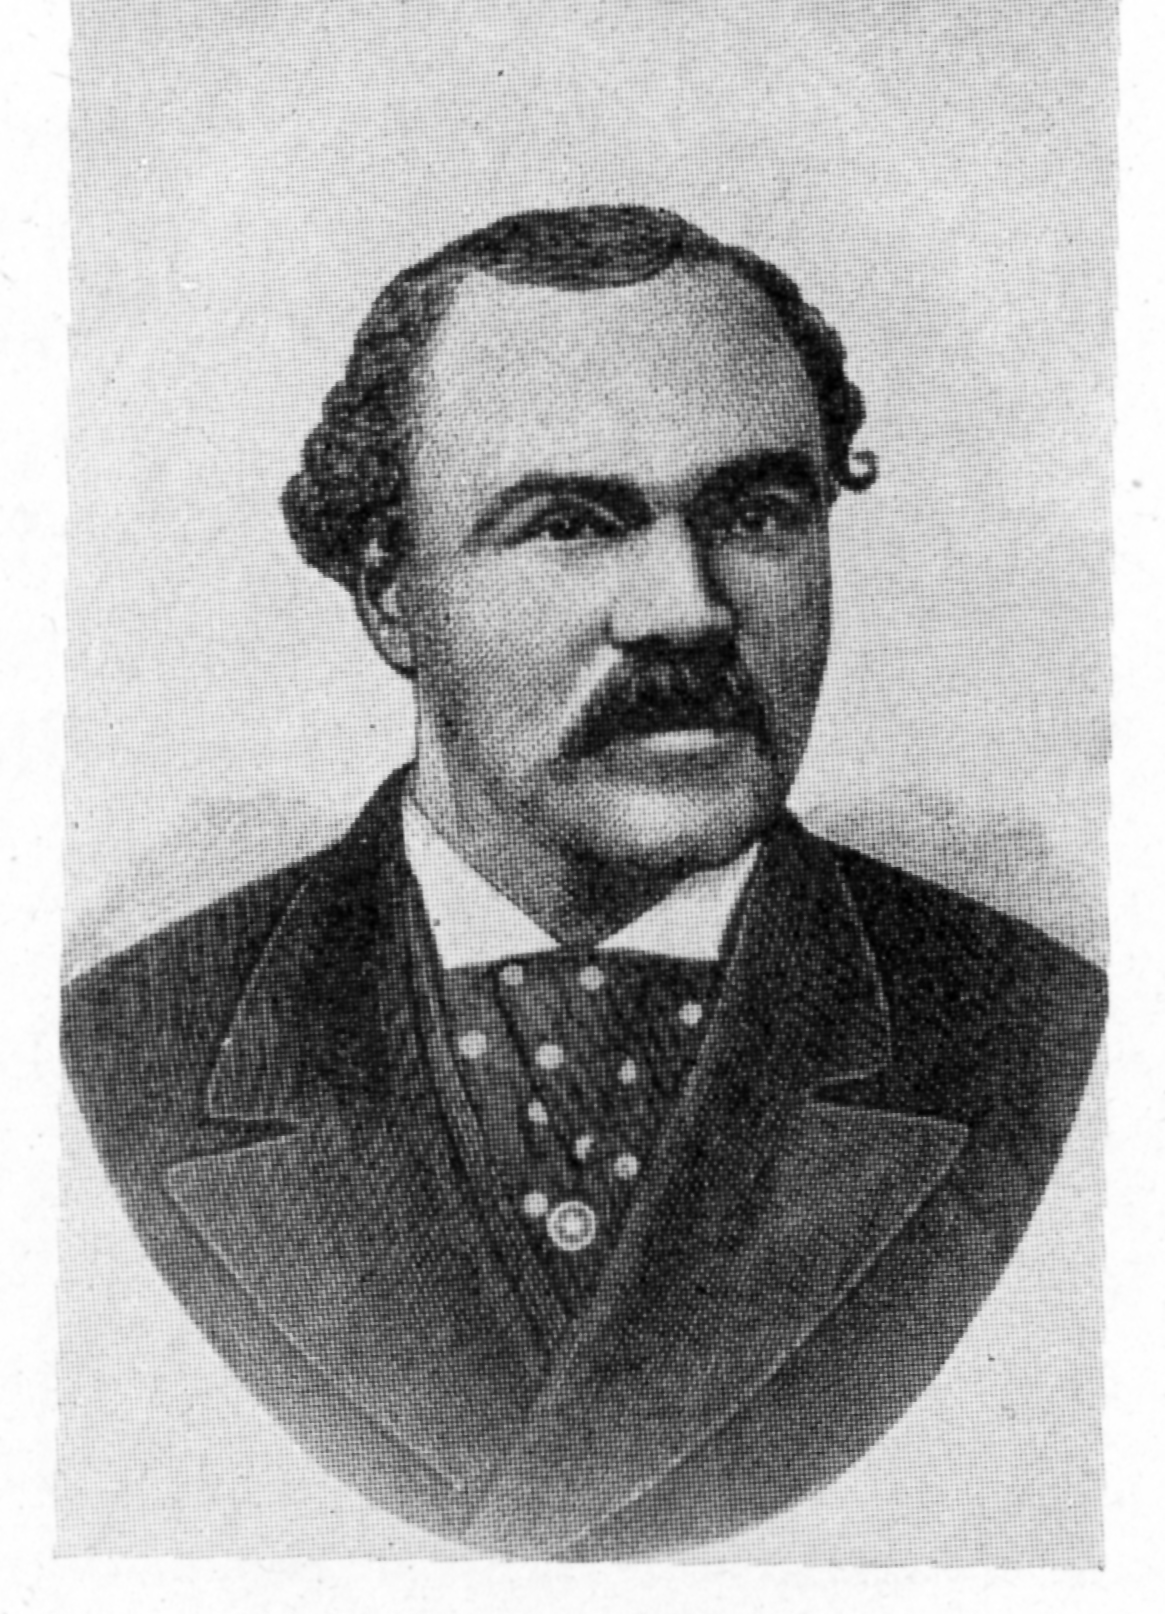 portrait of Thomas J. Bowers